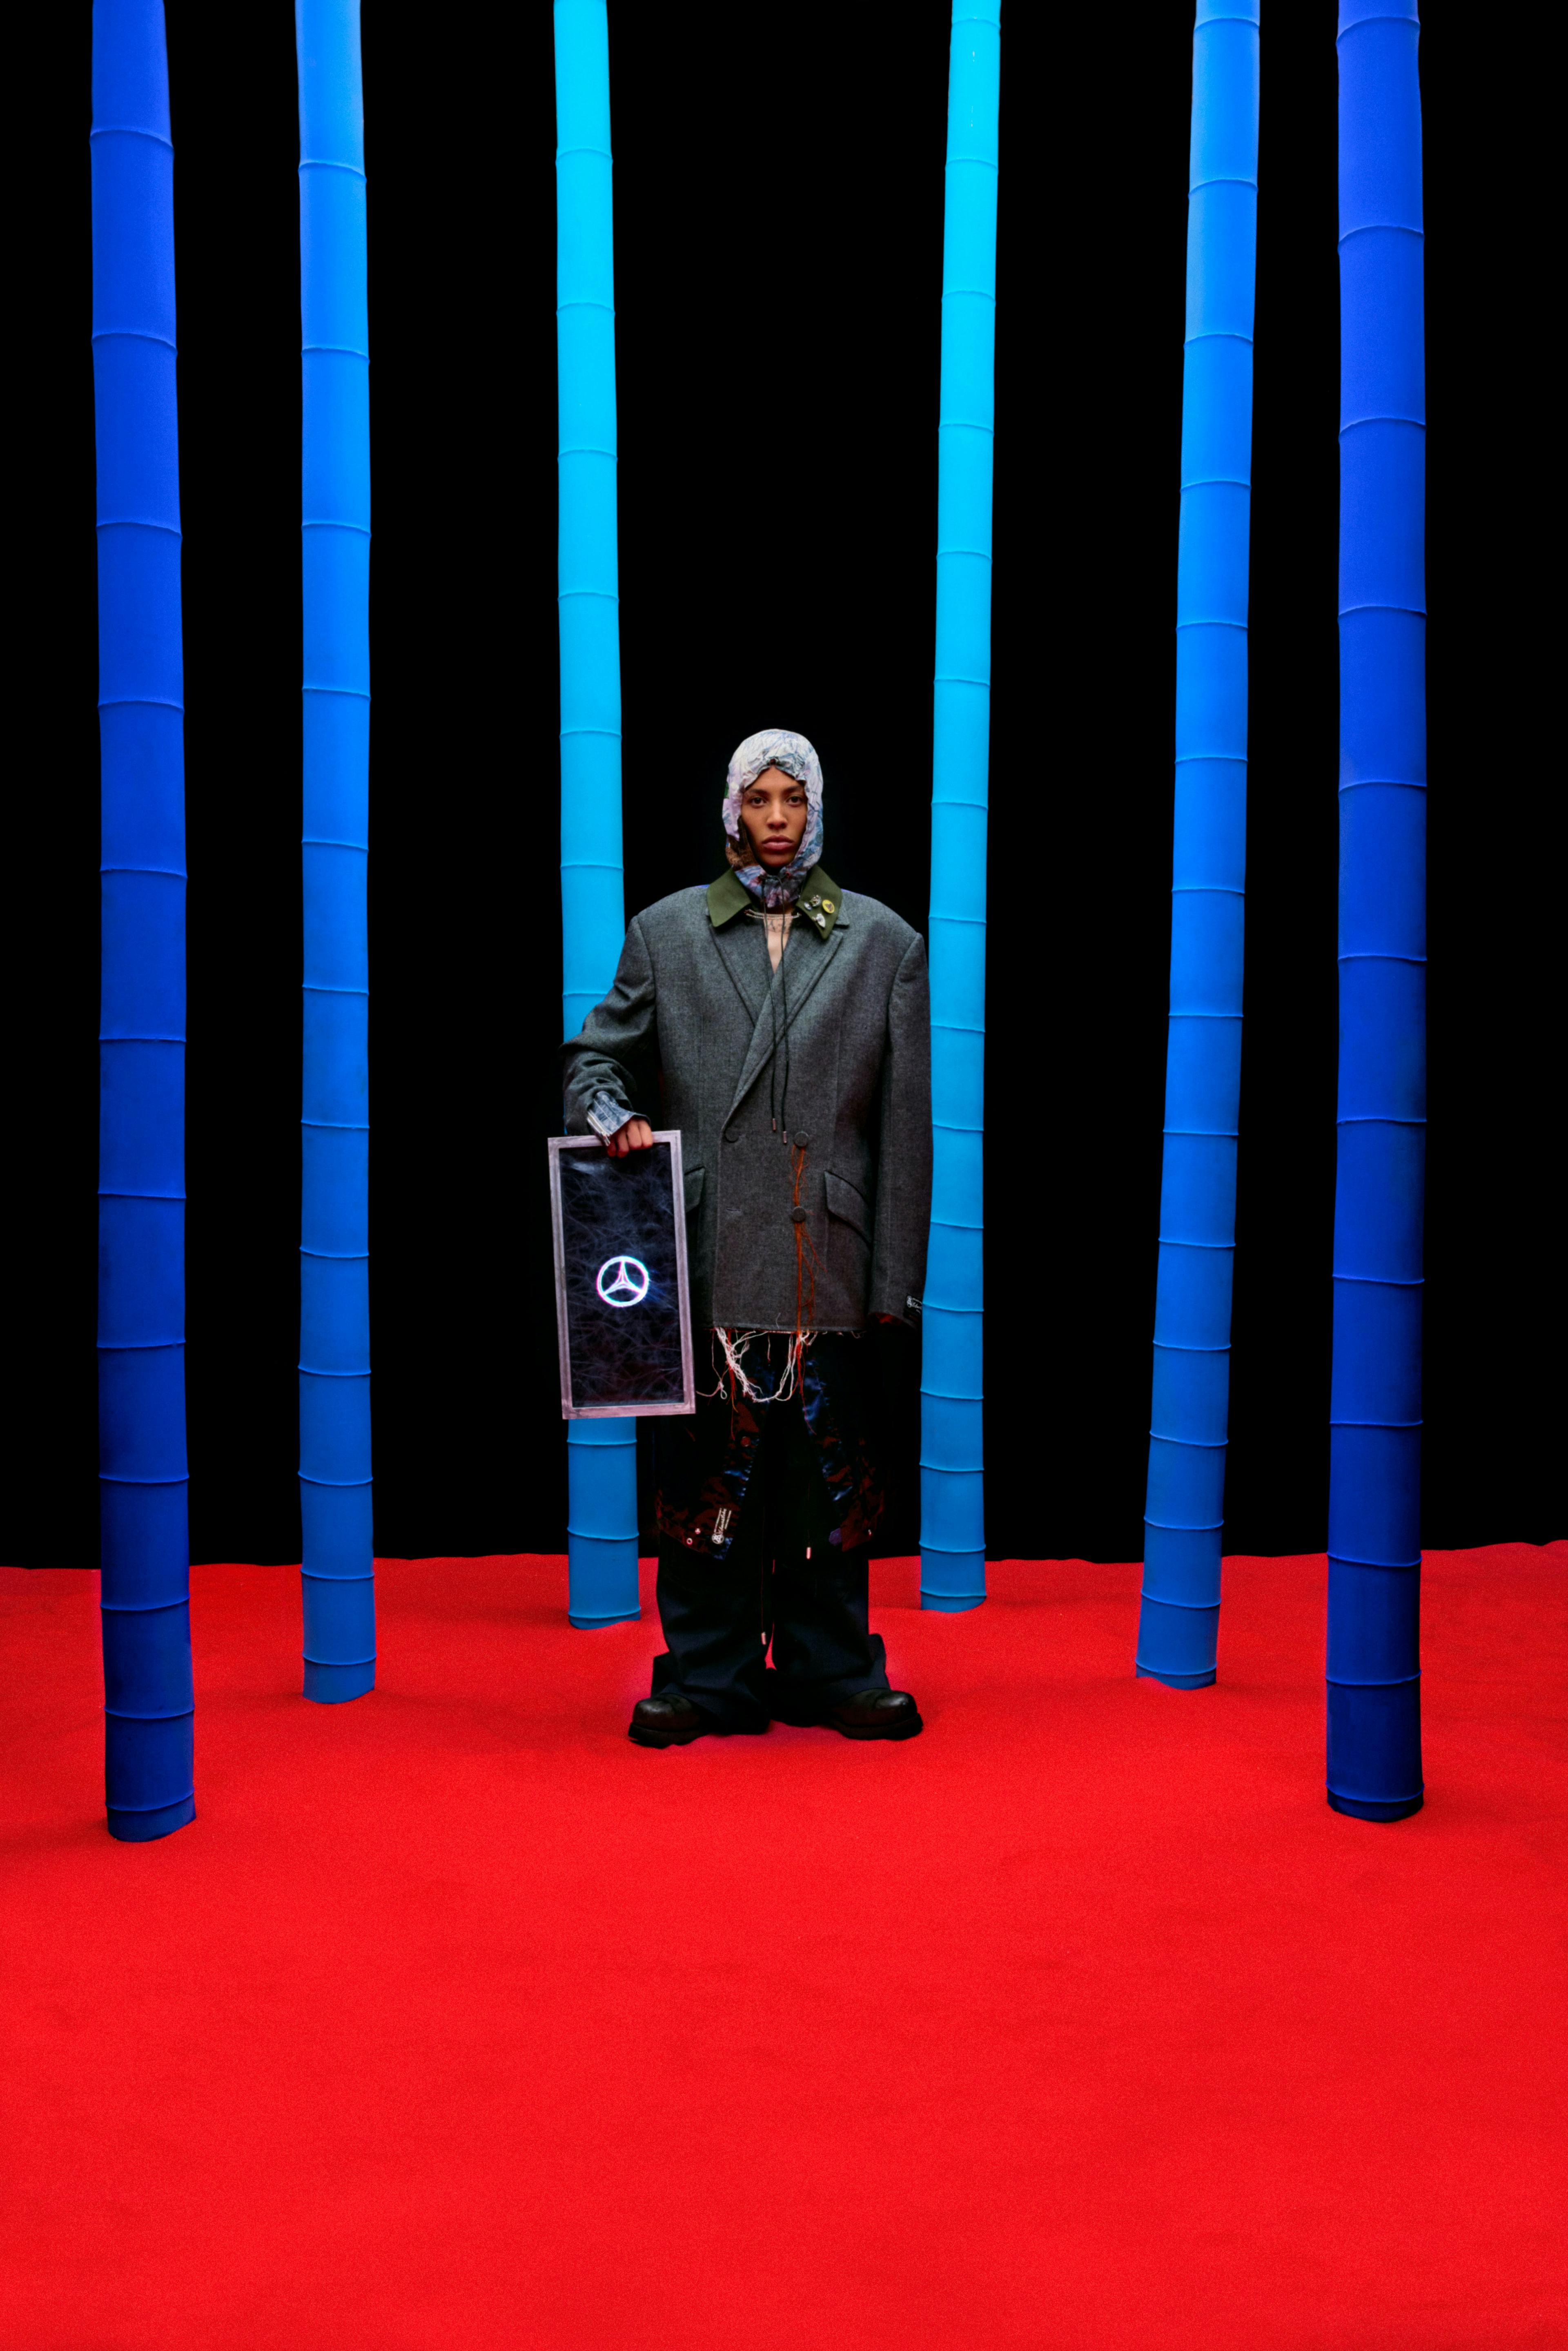 Kai Isaiah Jamal in Valentin Lessner red floor black backdrop blue poles